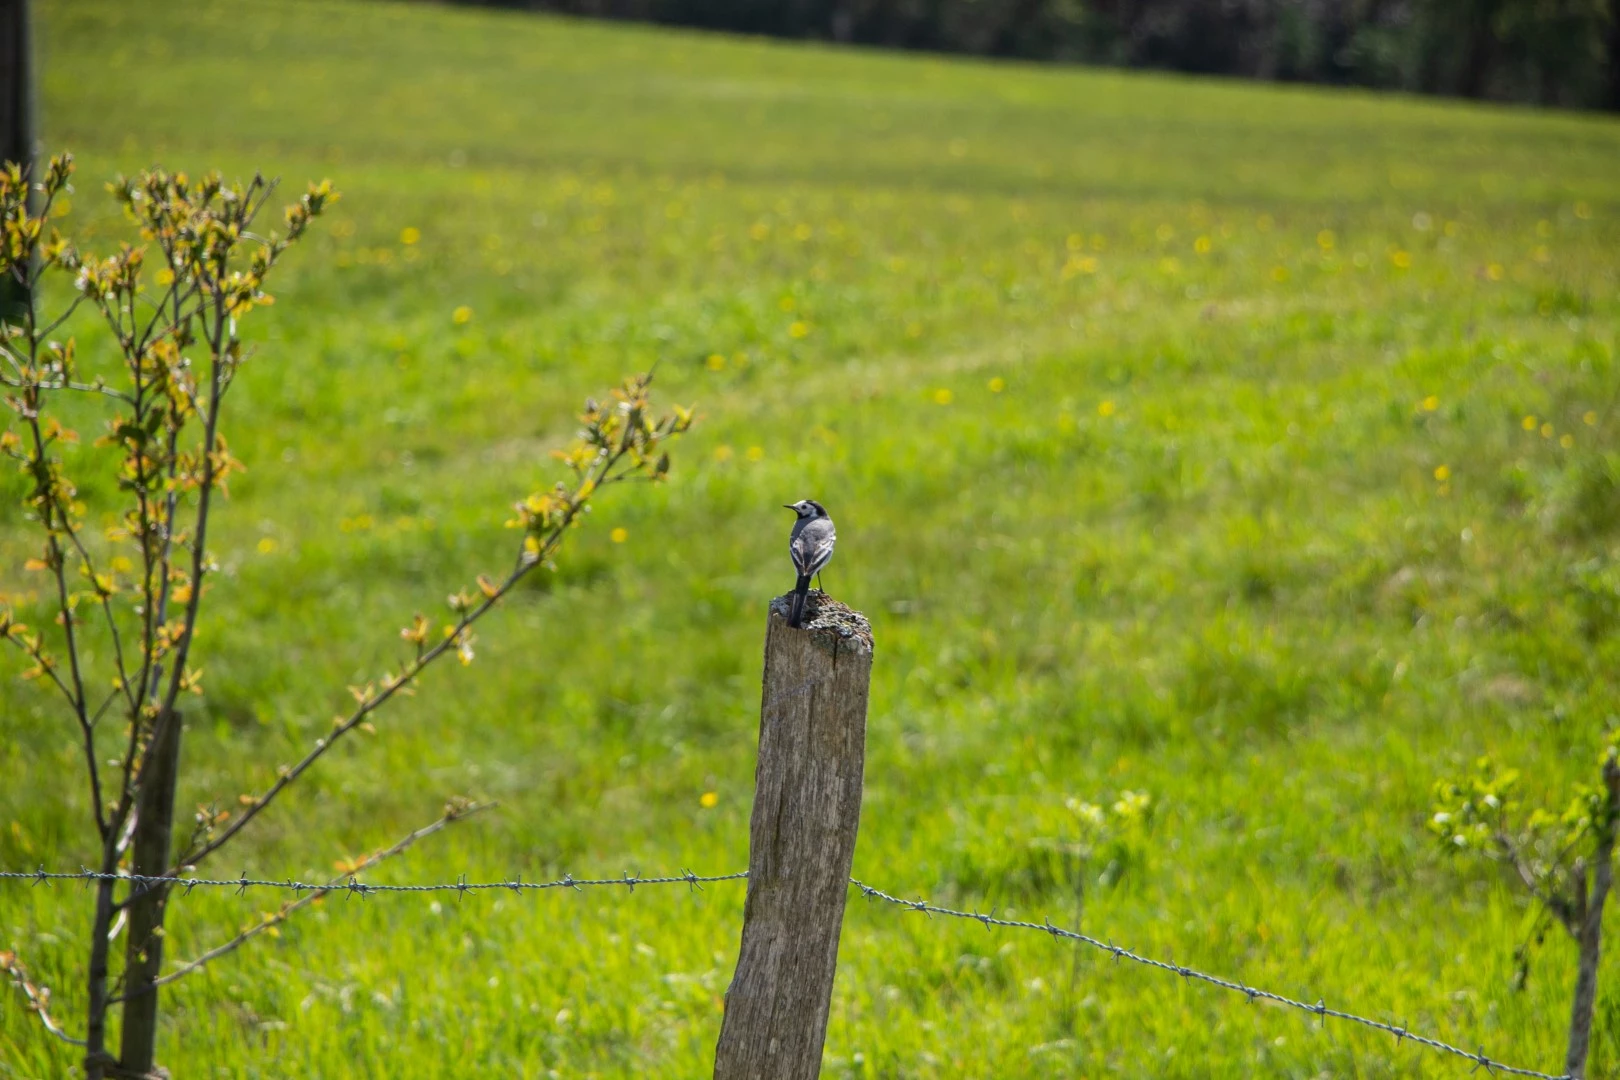 a bird sitting on wood in summer